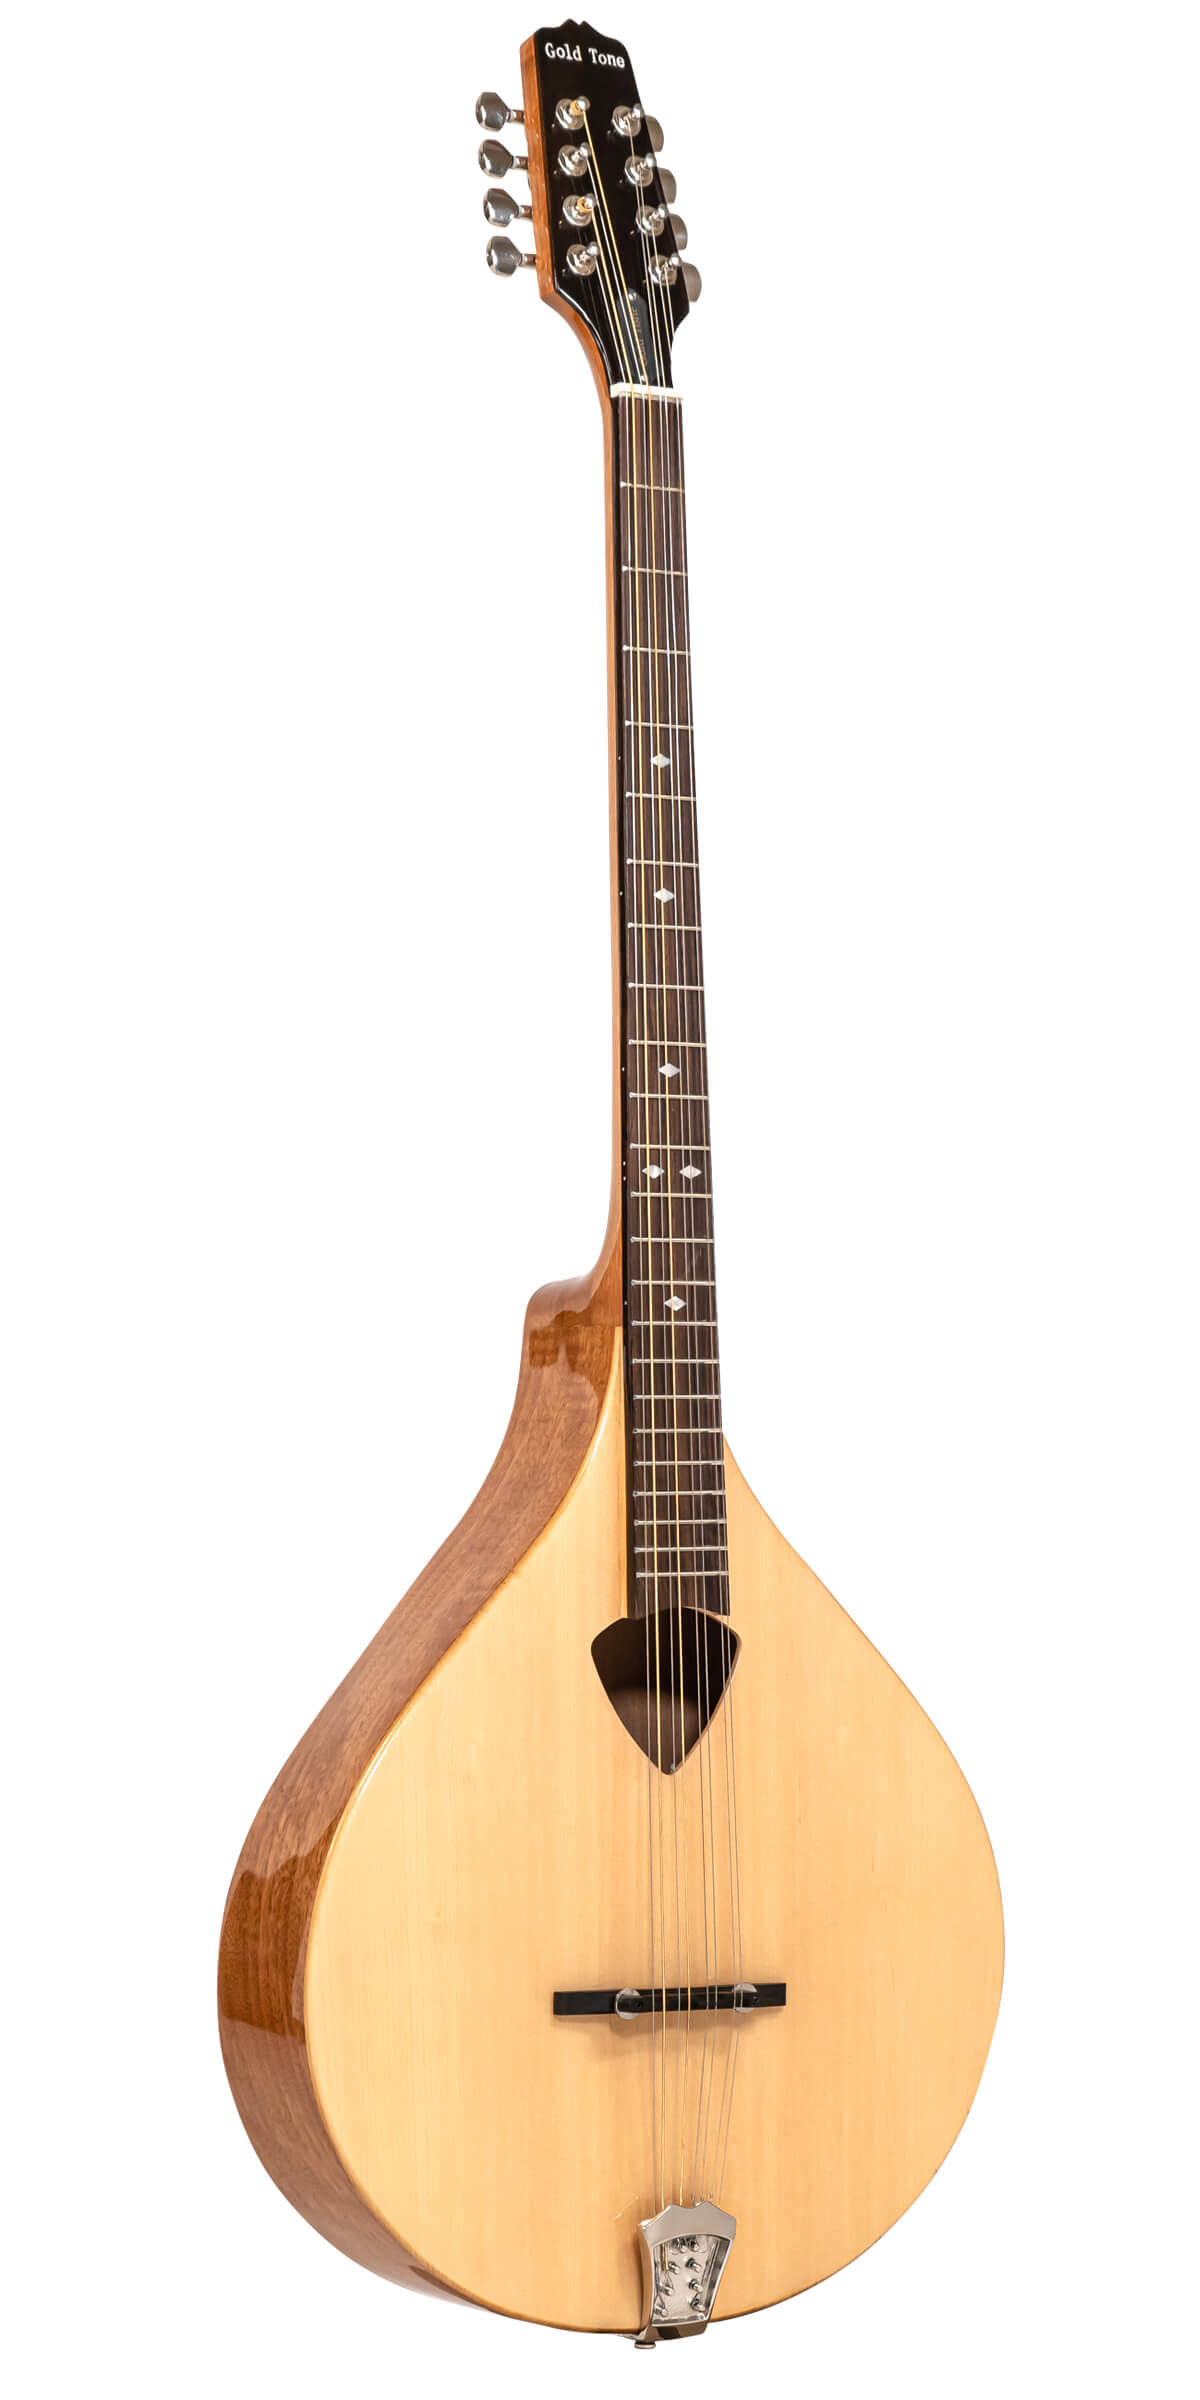 WINOMO 8-String Mandolin Guitar Tailpiece with Screws Gold 